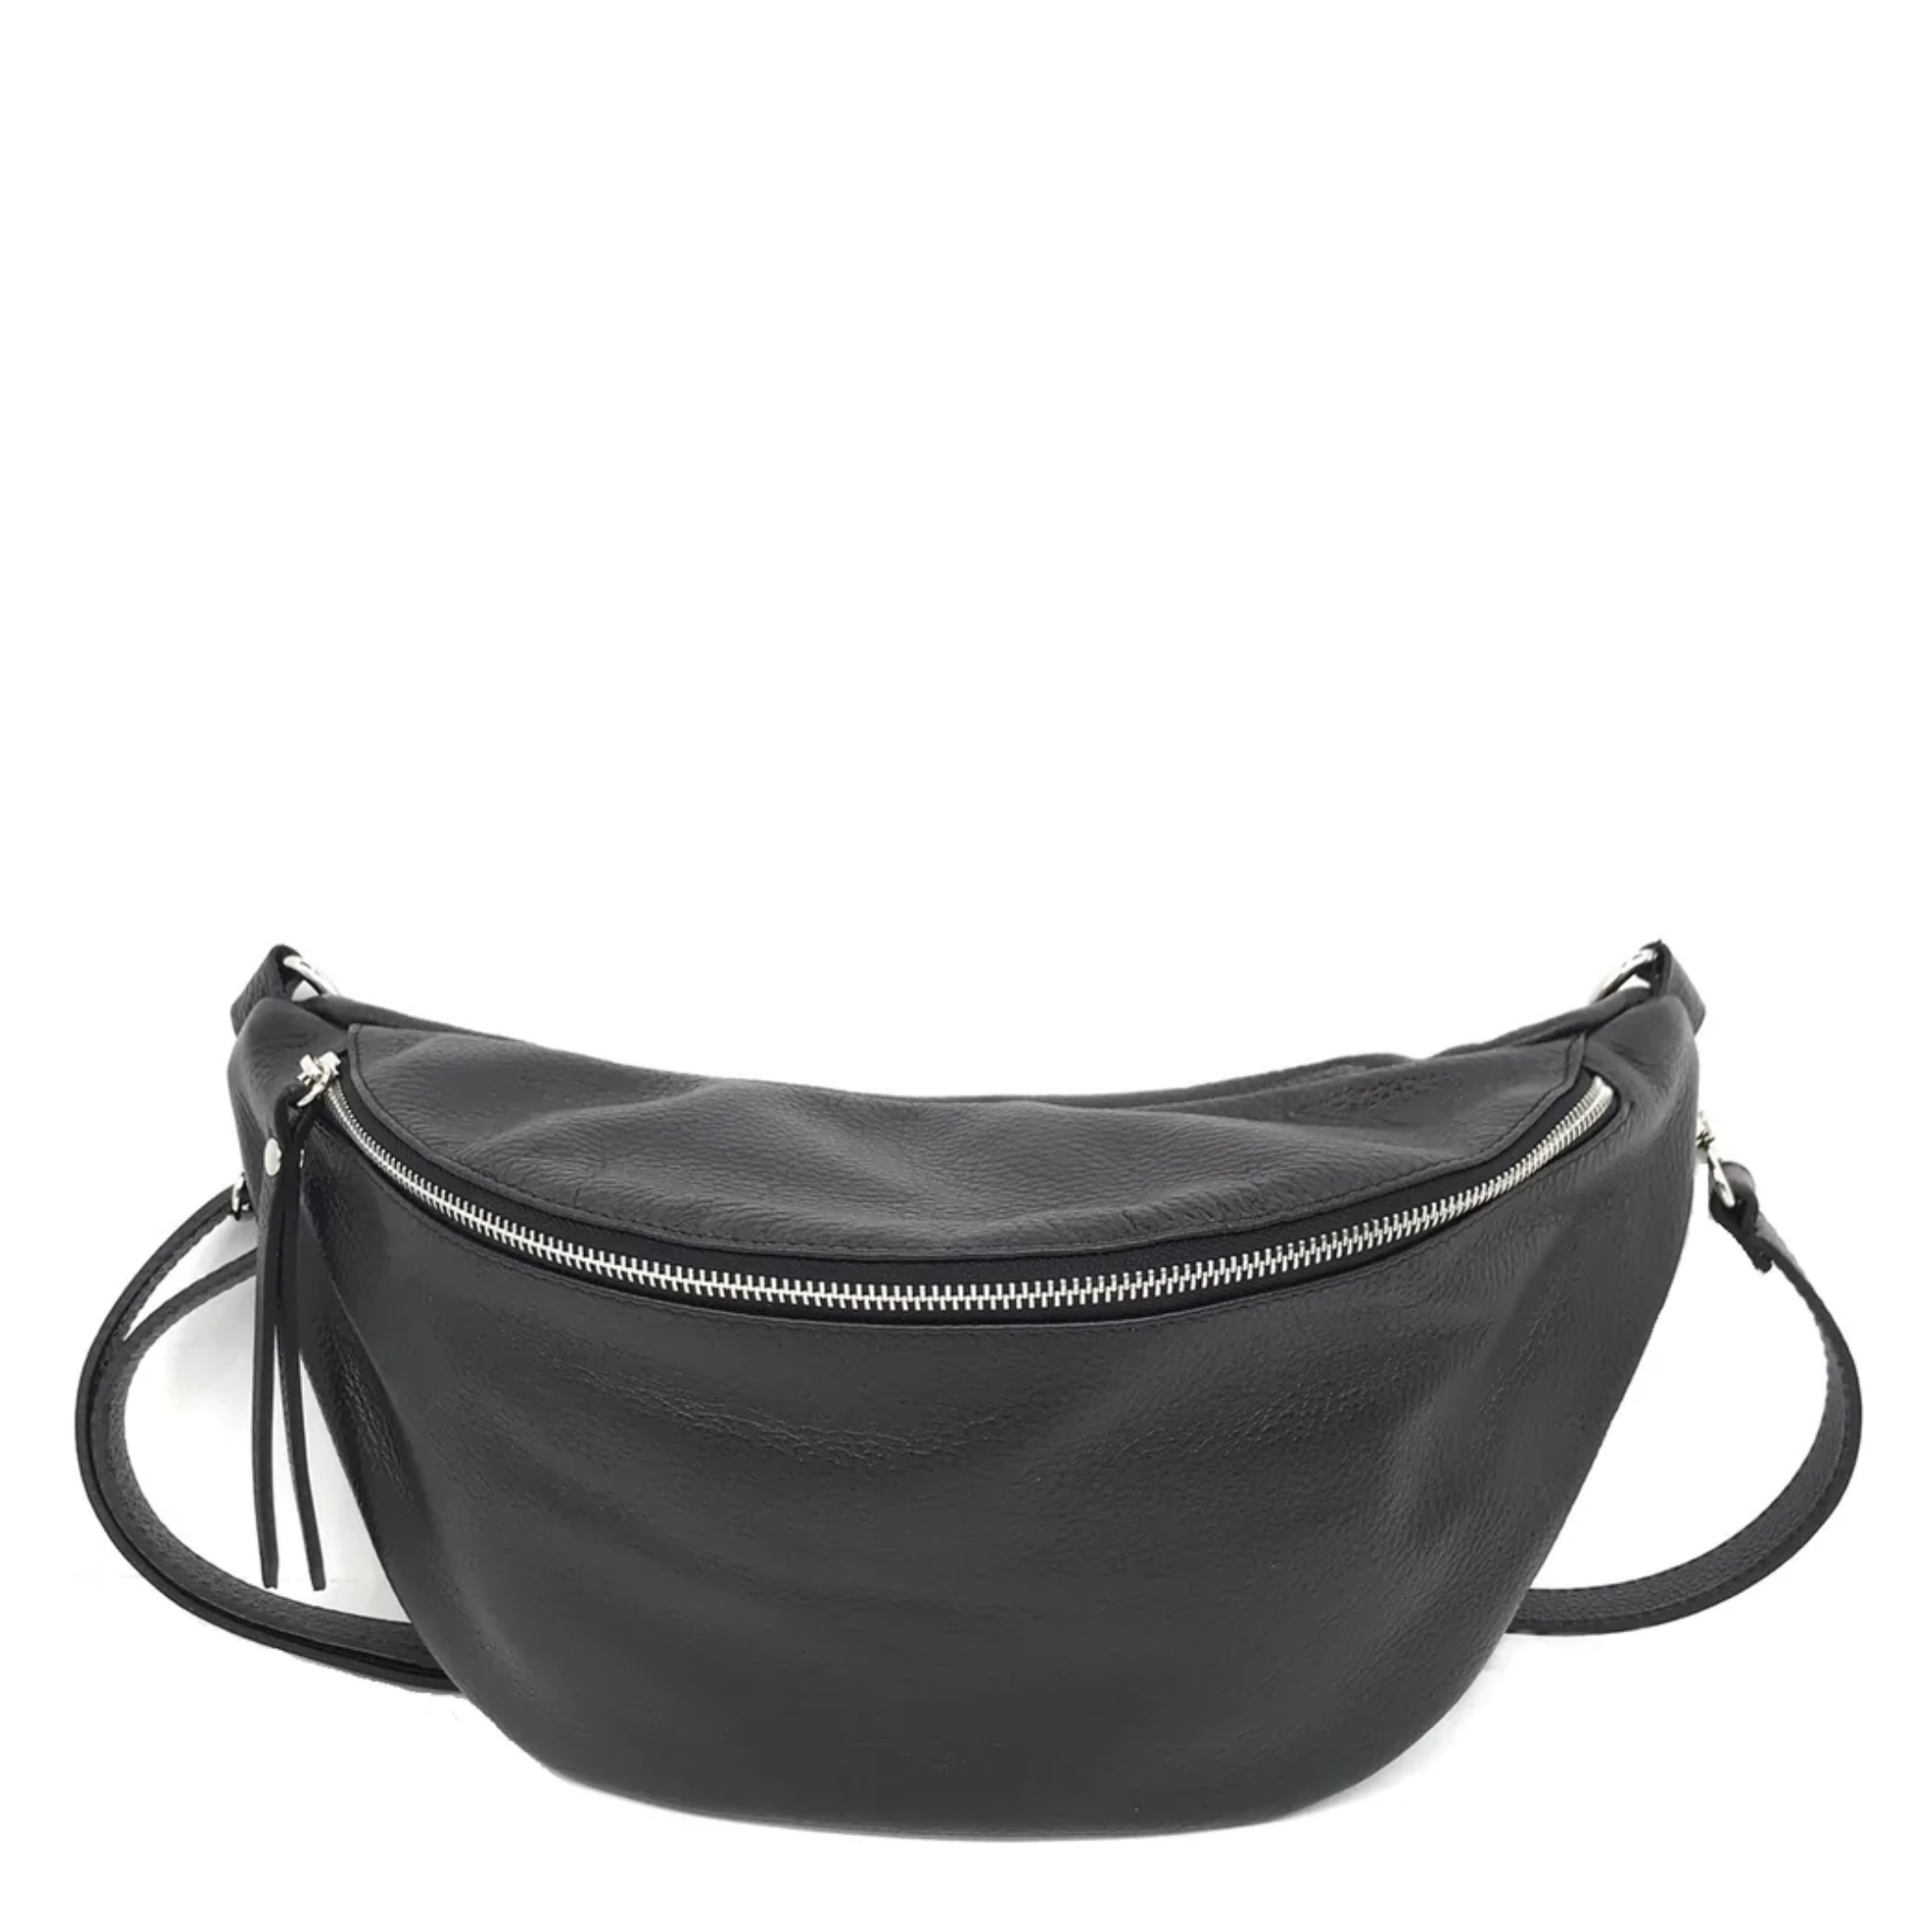 Nicoletta Leather Sling Bag